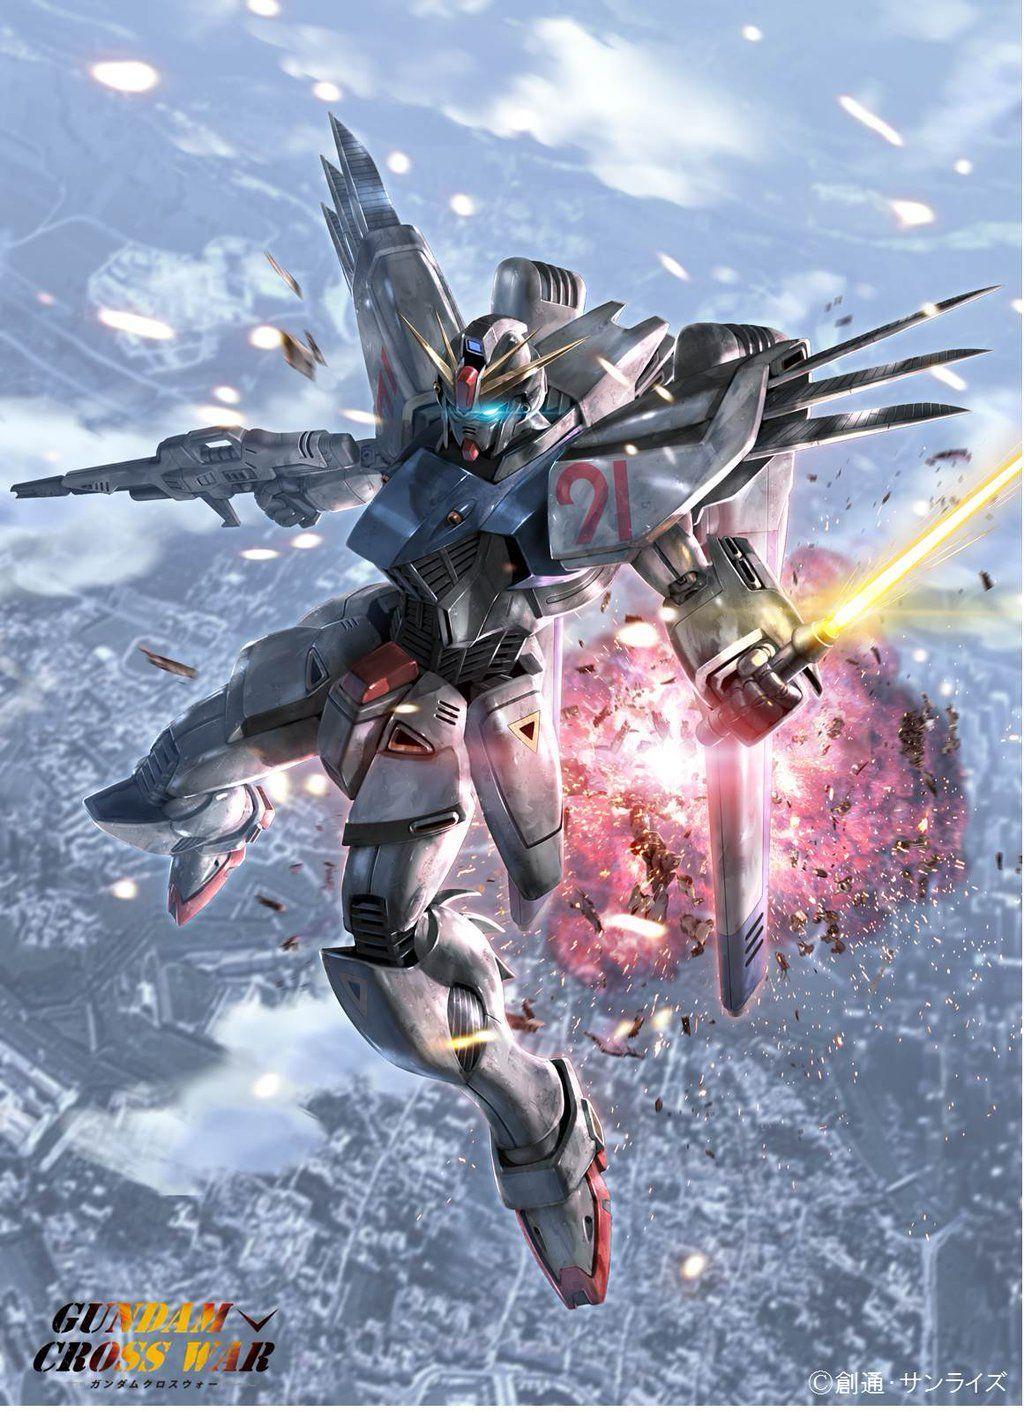 Gundam Phone Wallpapers Top Free Gundam Phone Backgrounds Wallpaperaccess